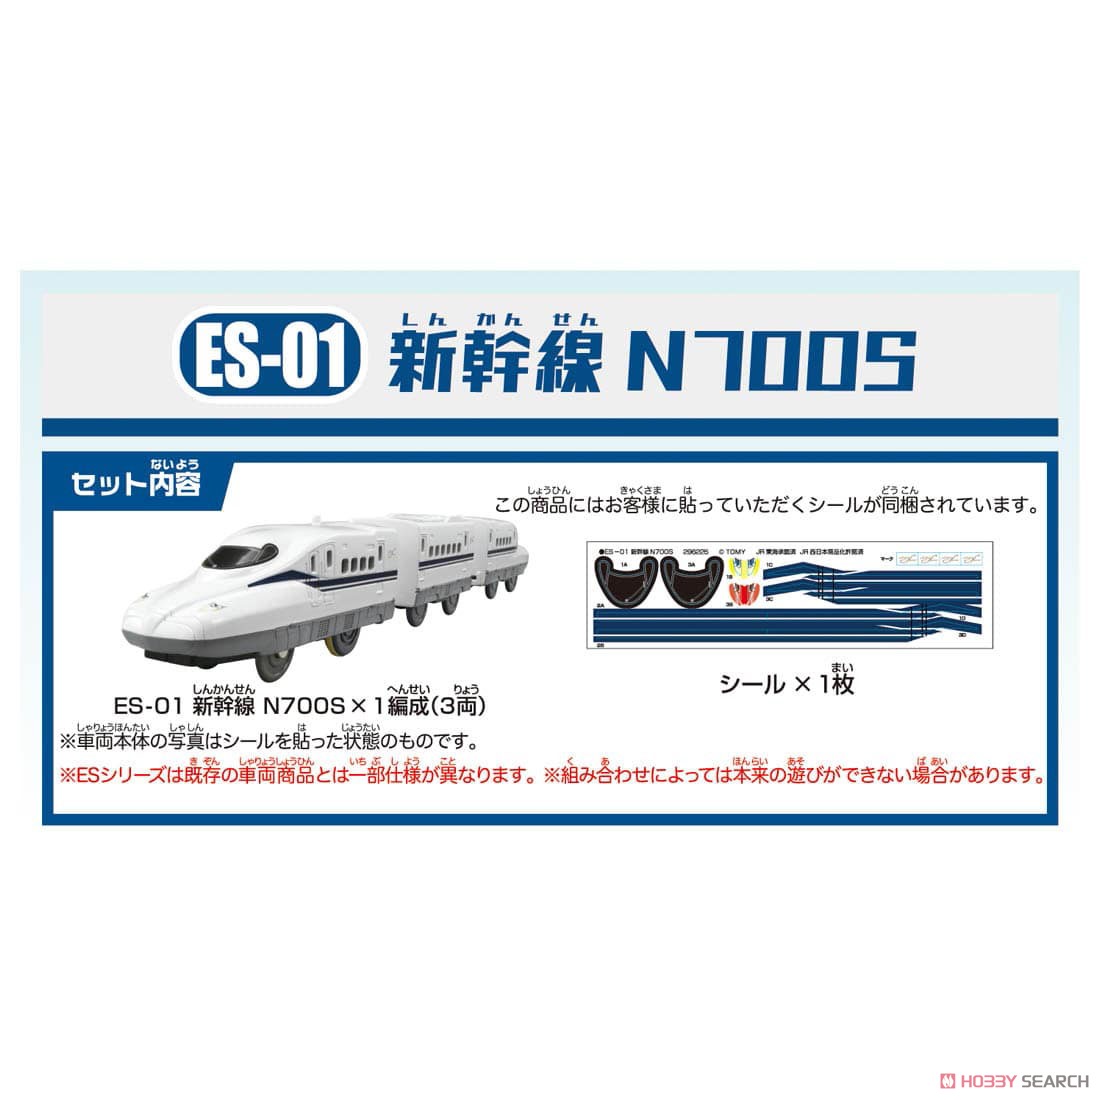 ES-01 新幹線 N700S (プラレール) その他の画像1